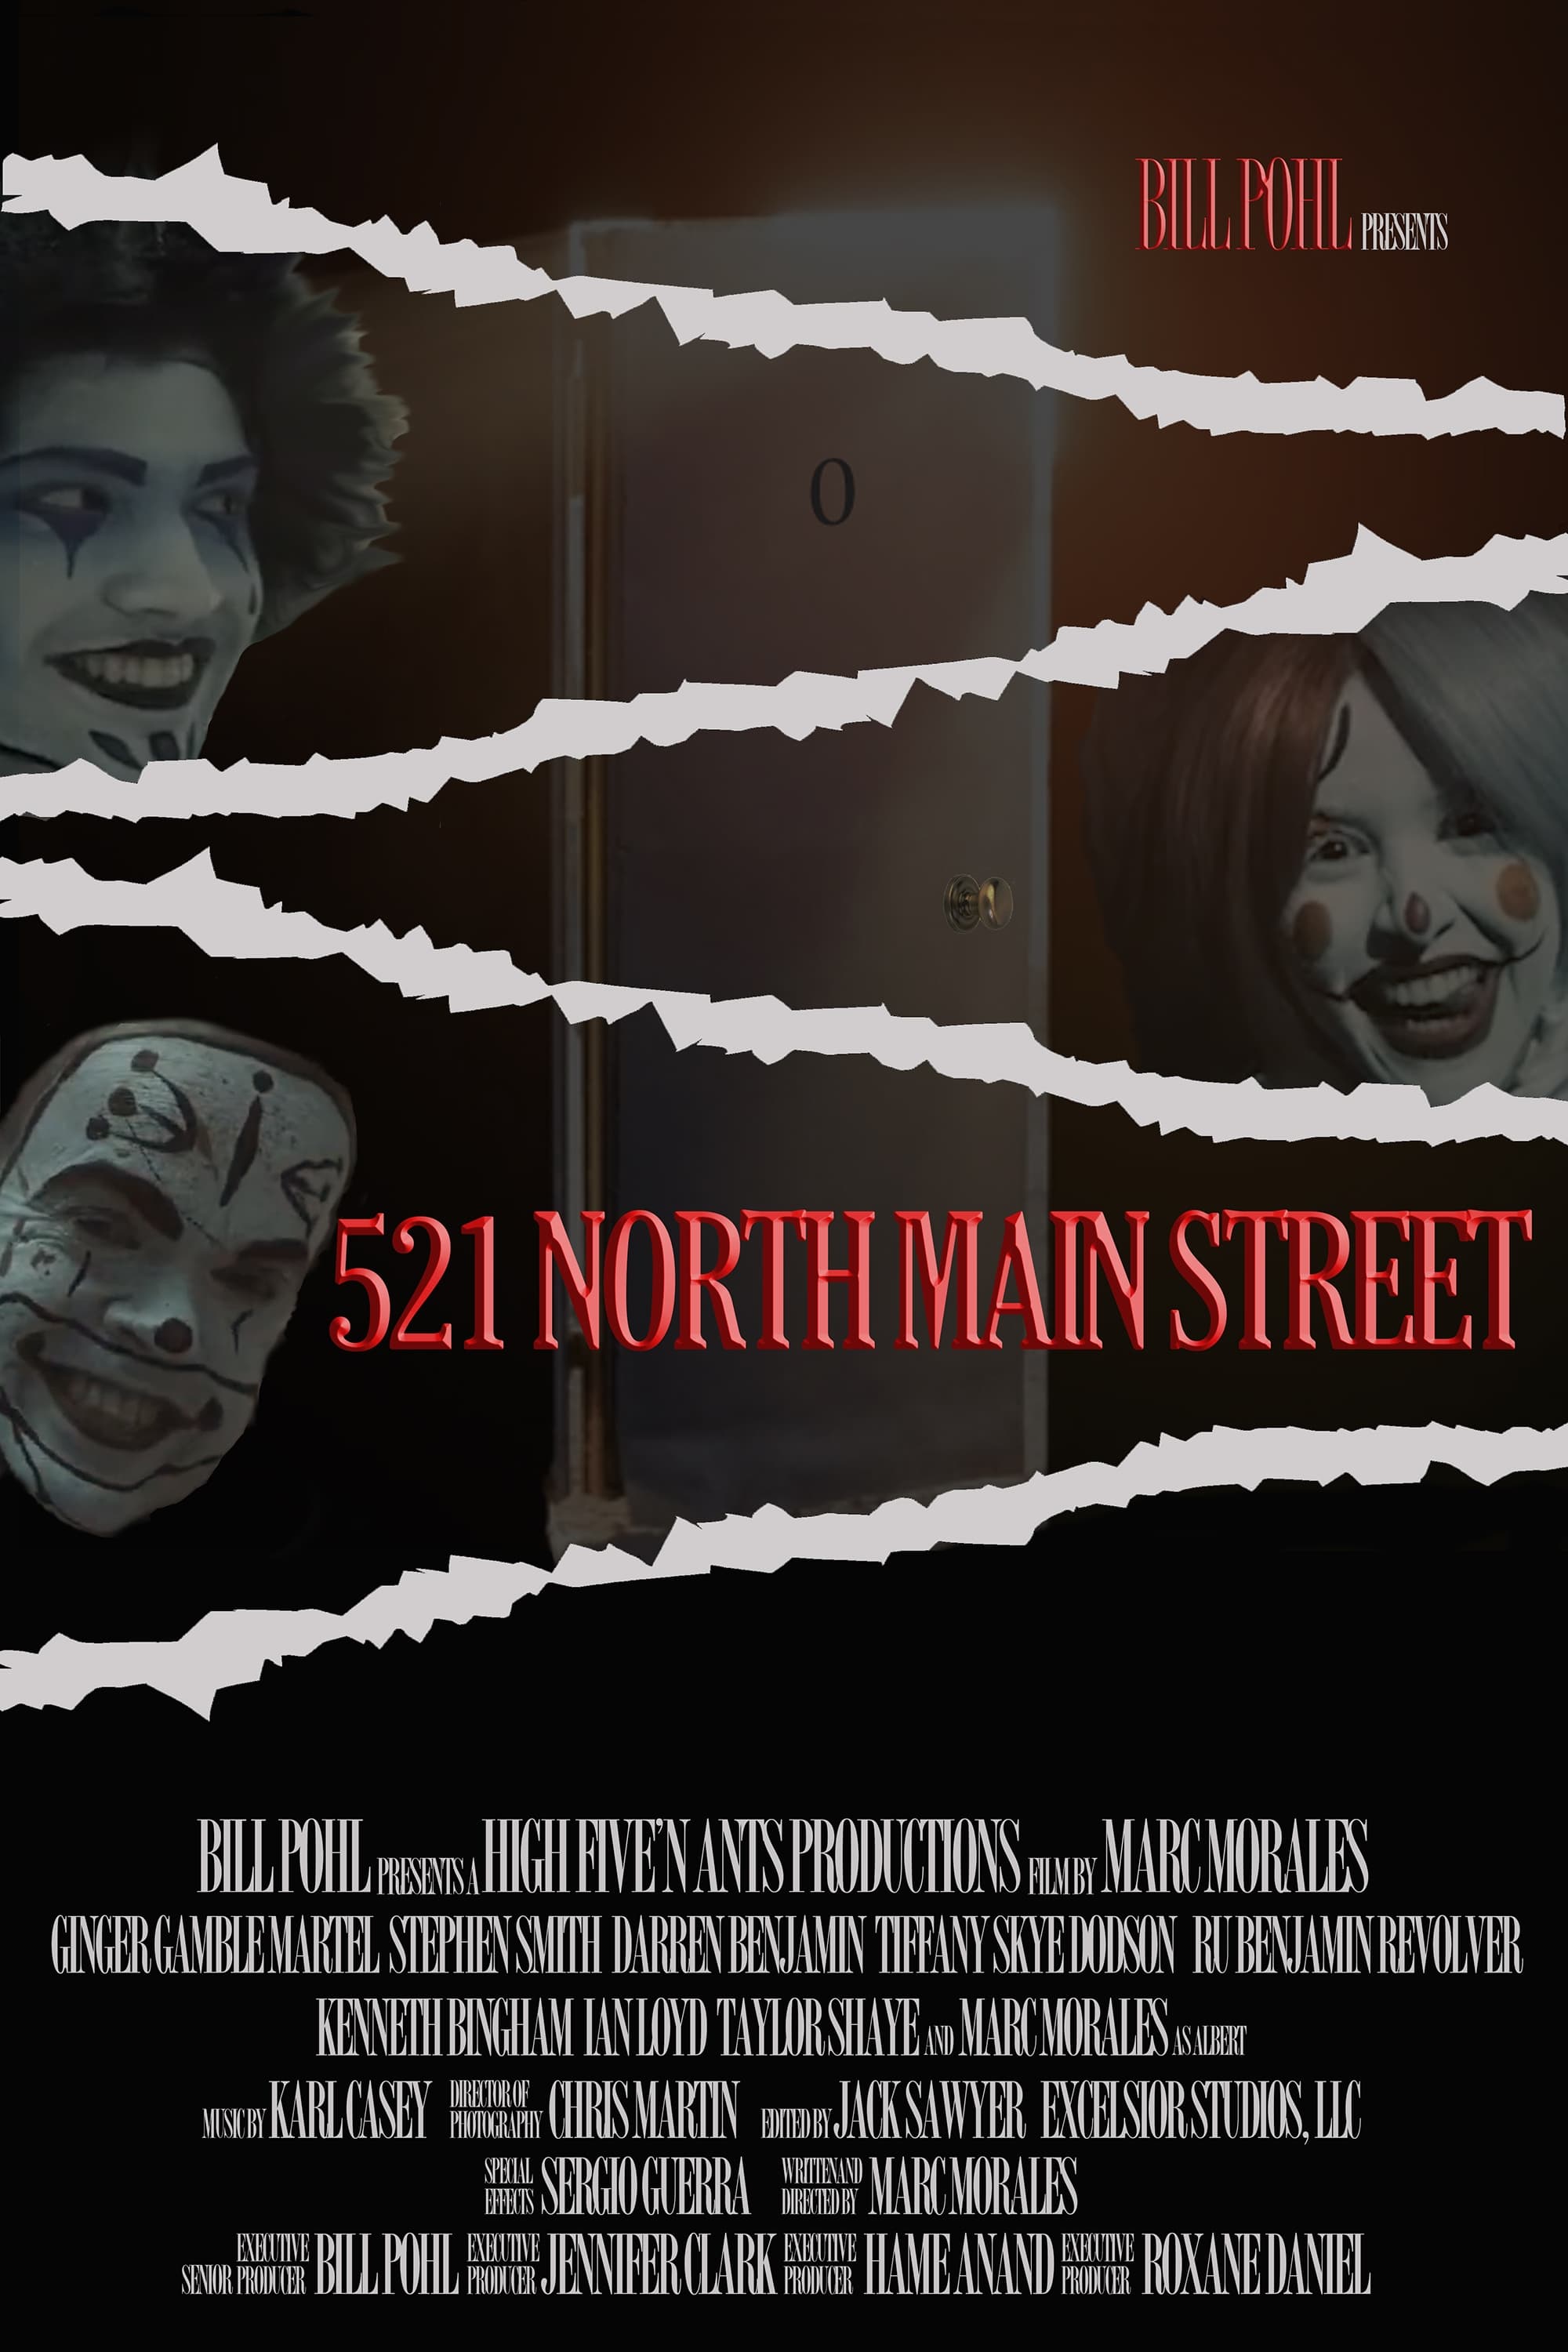 521 North Main Street